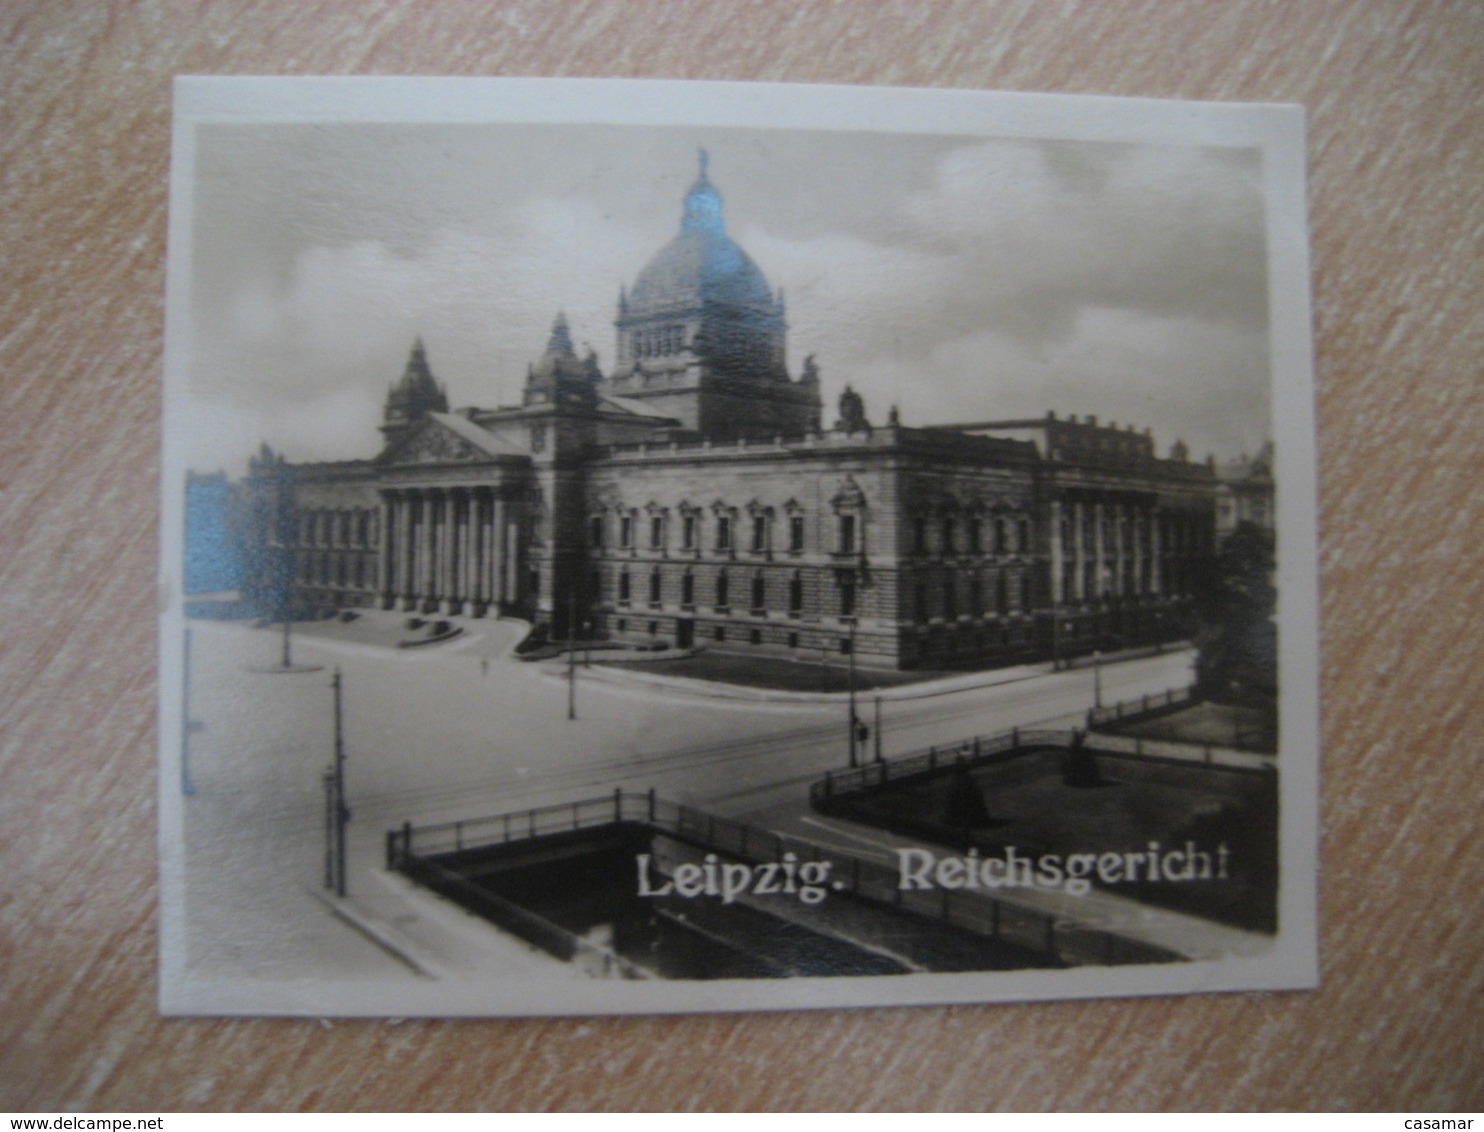 LEIPZIG Reichsgericht Bilder Card Photo Photography (4x5,2cm) Sachsen Saxony GERMANY 30s Tobacco - Non Classificati